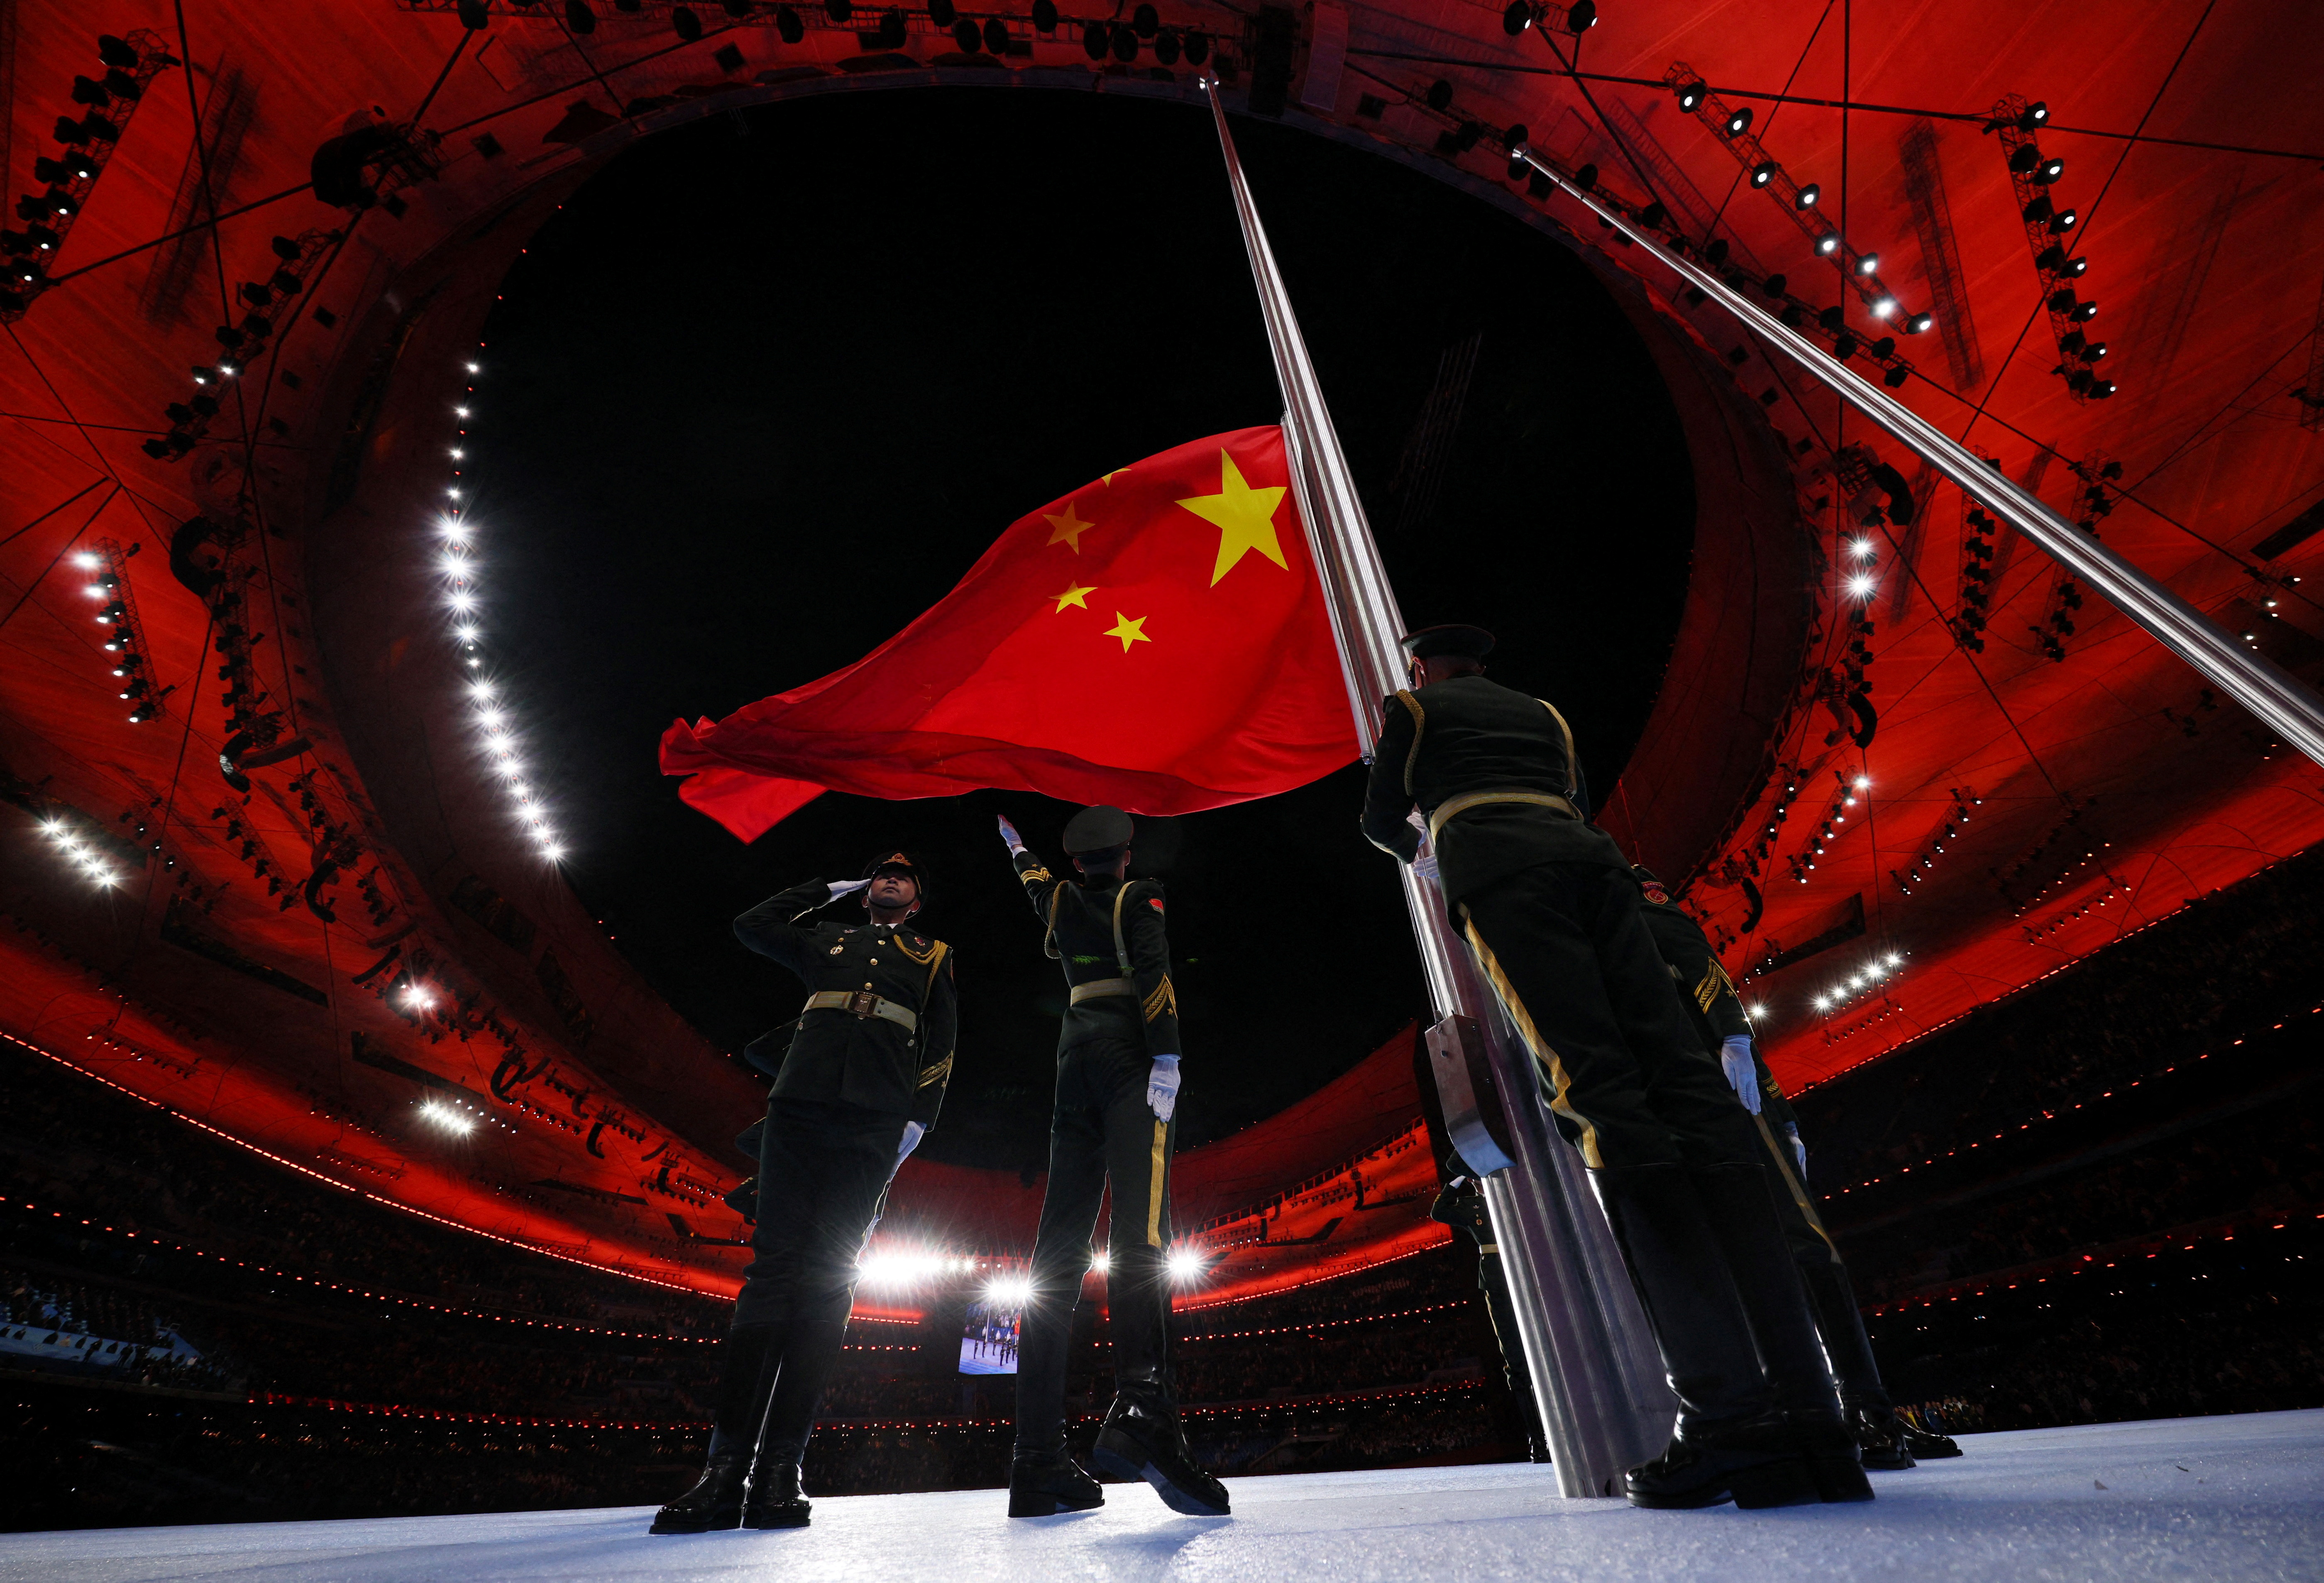 Juegos Olímpicos de Pekín 2022 - Ceremonia de apertura - Estadio Nacional, Pekín, China - 4 de febrero de 2022. La bandera china es izada durante la ceremonia de apertura. REUTERS/Brian Snyder 